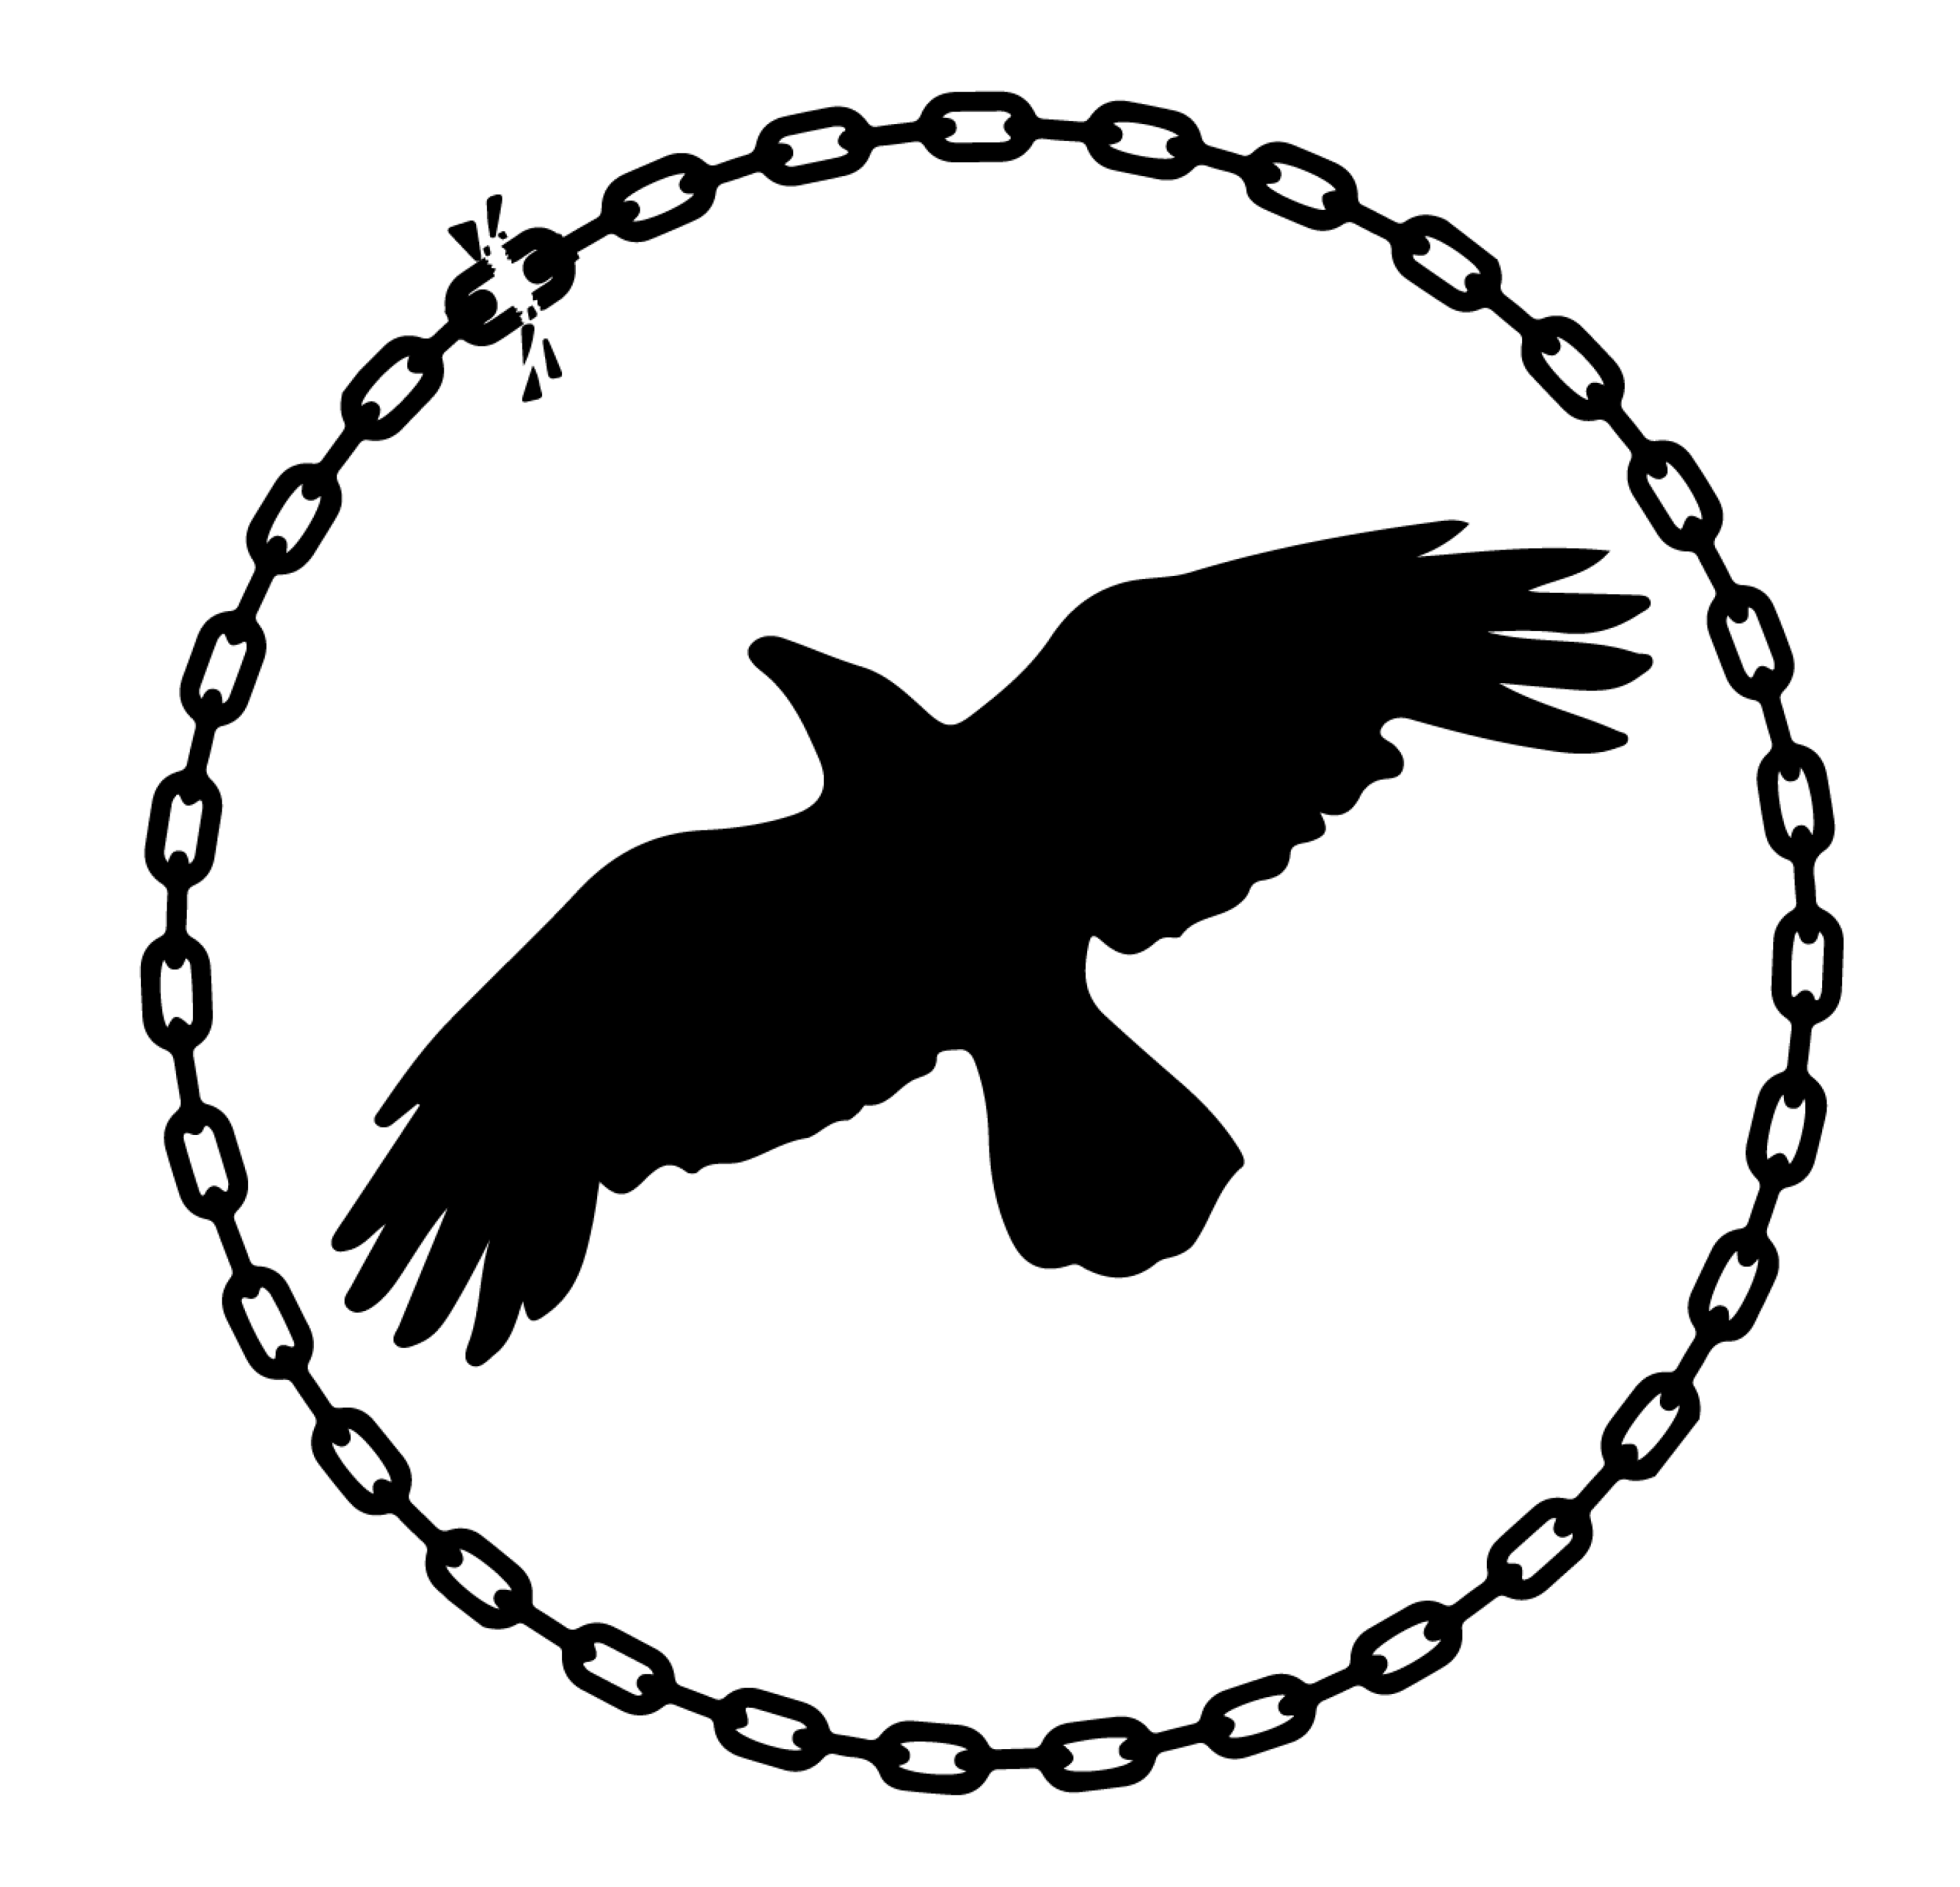 Stateless Logo